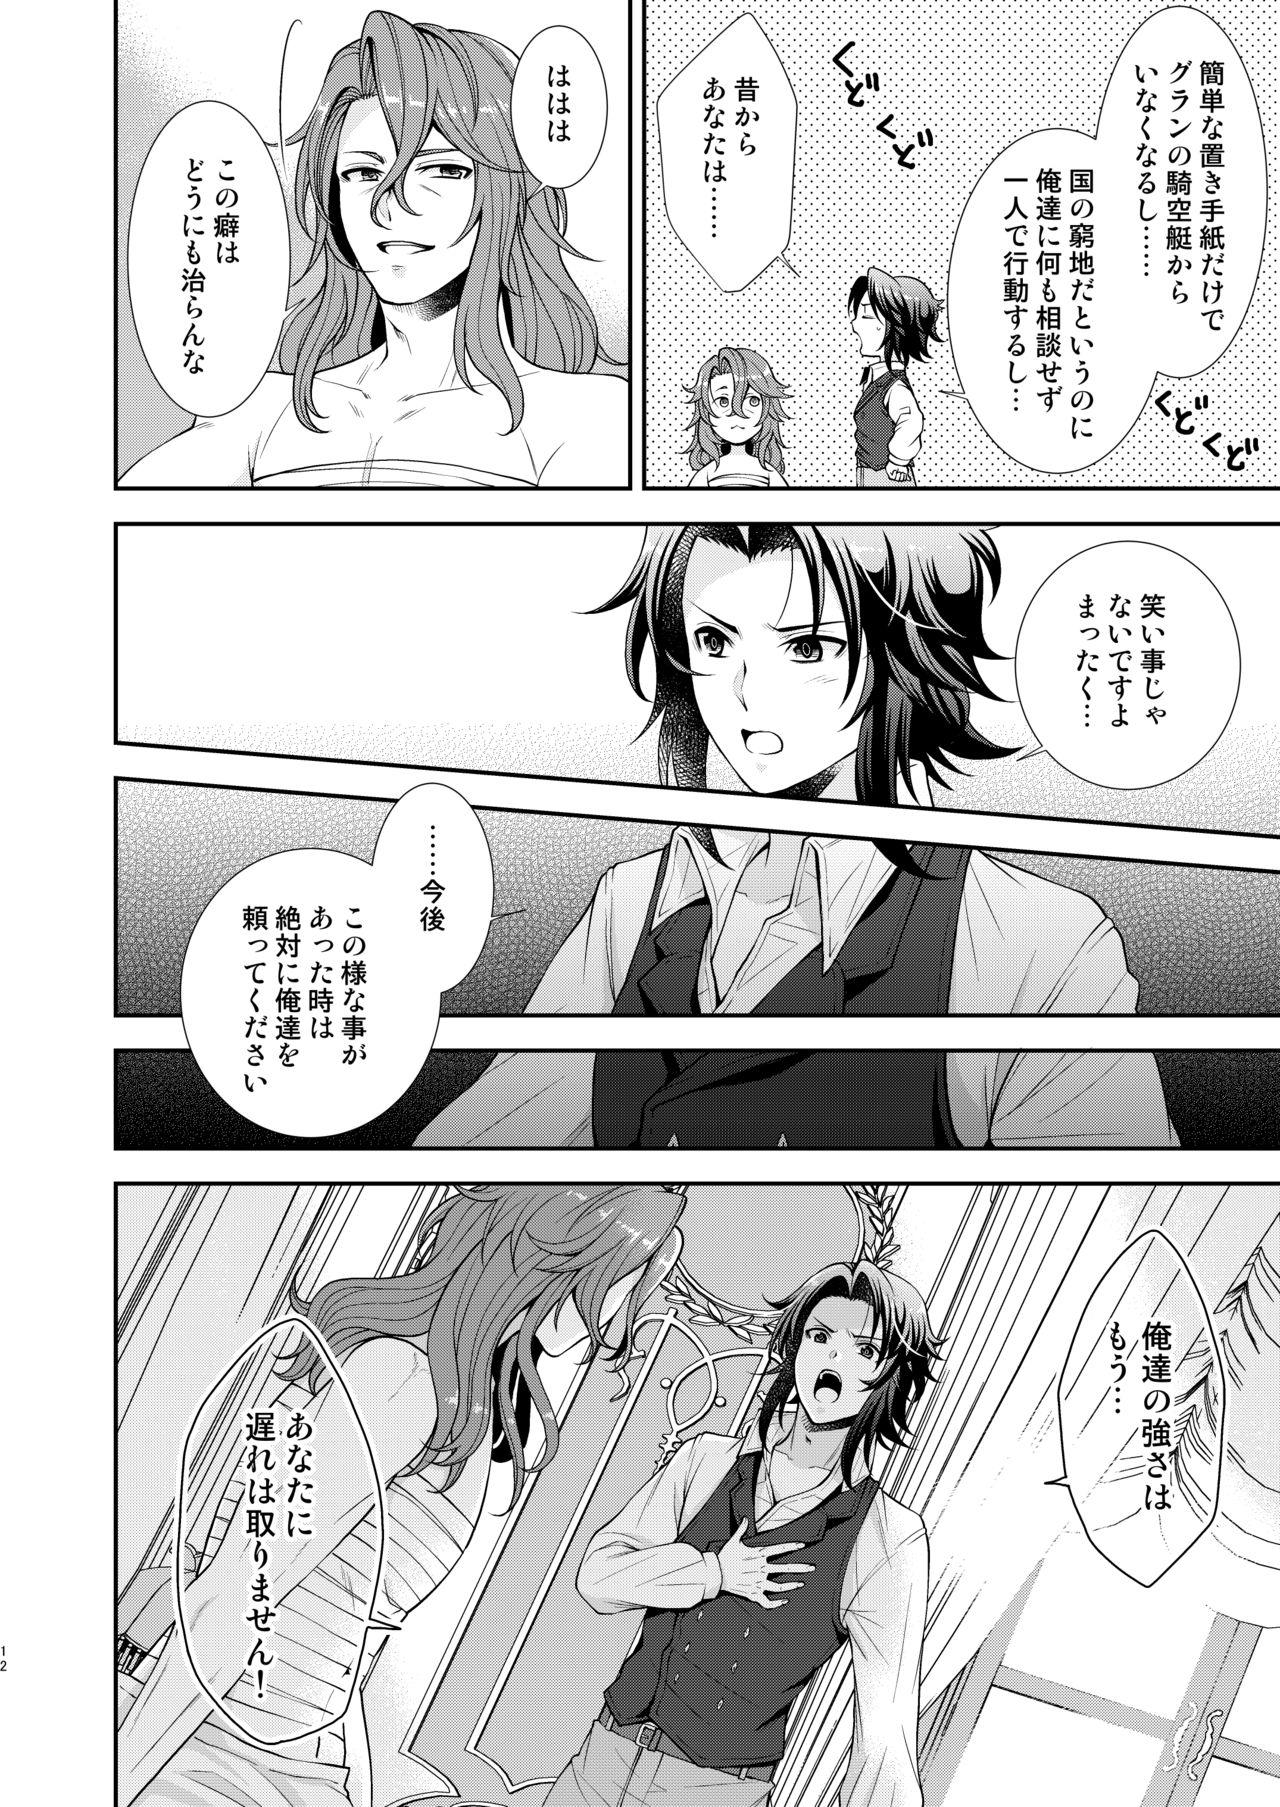 Boyfriend Kizuato - Granblue fantasy Storyline - Page 9